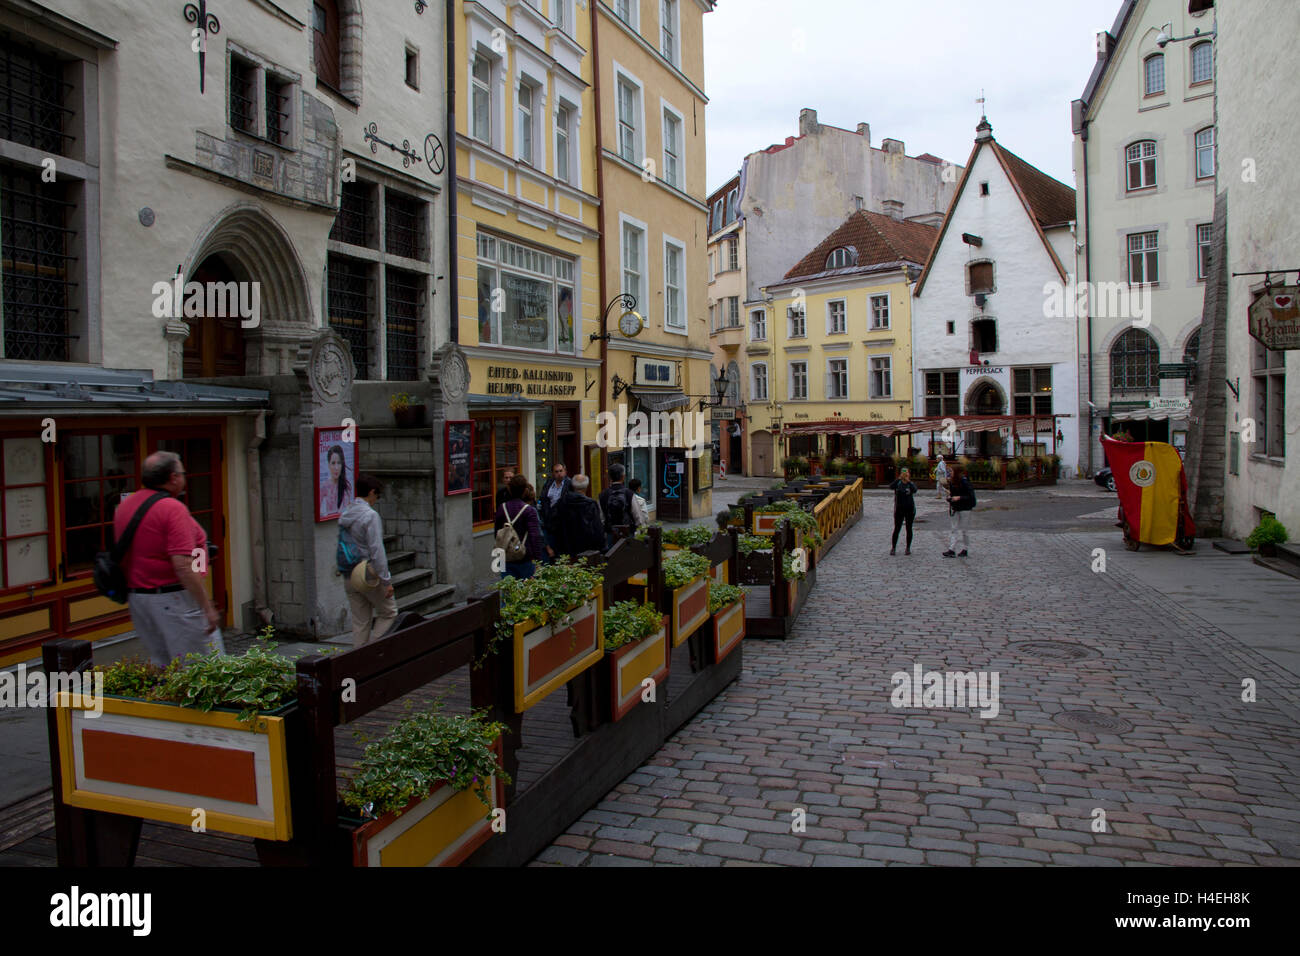 A produce vendor in Old Town, Tallinn, Estonia. Stock Photo